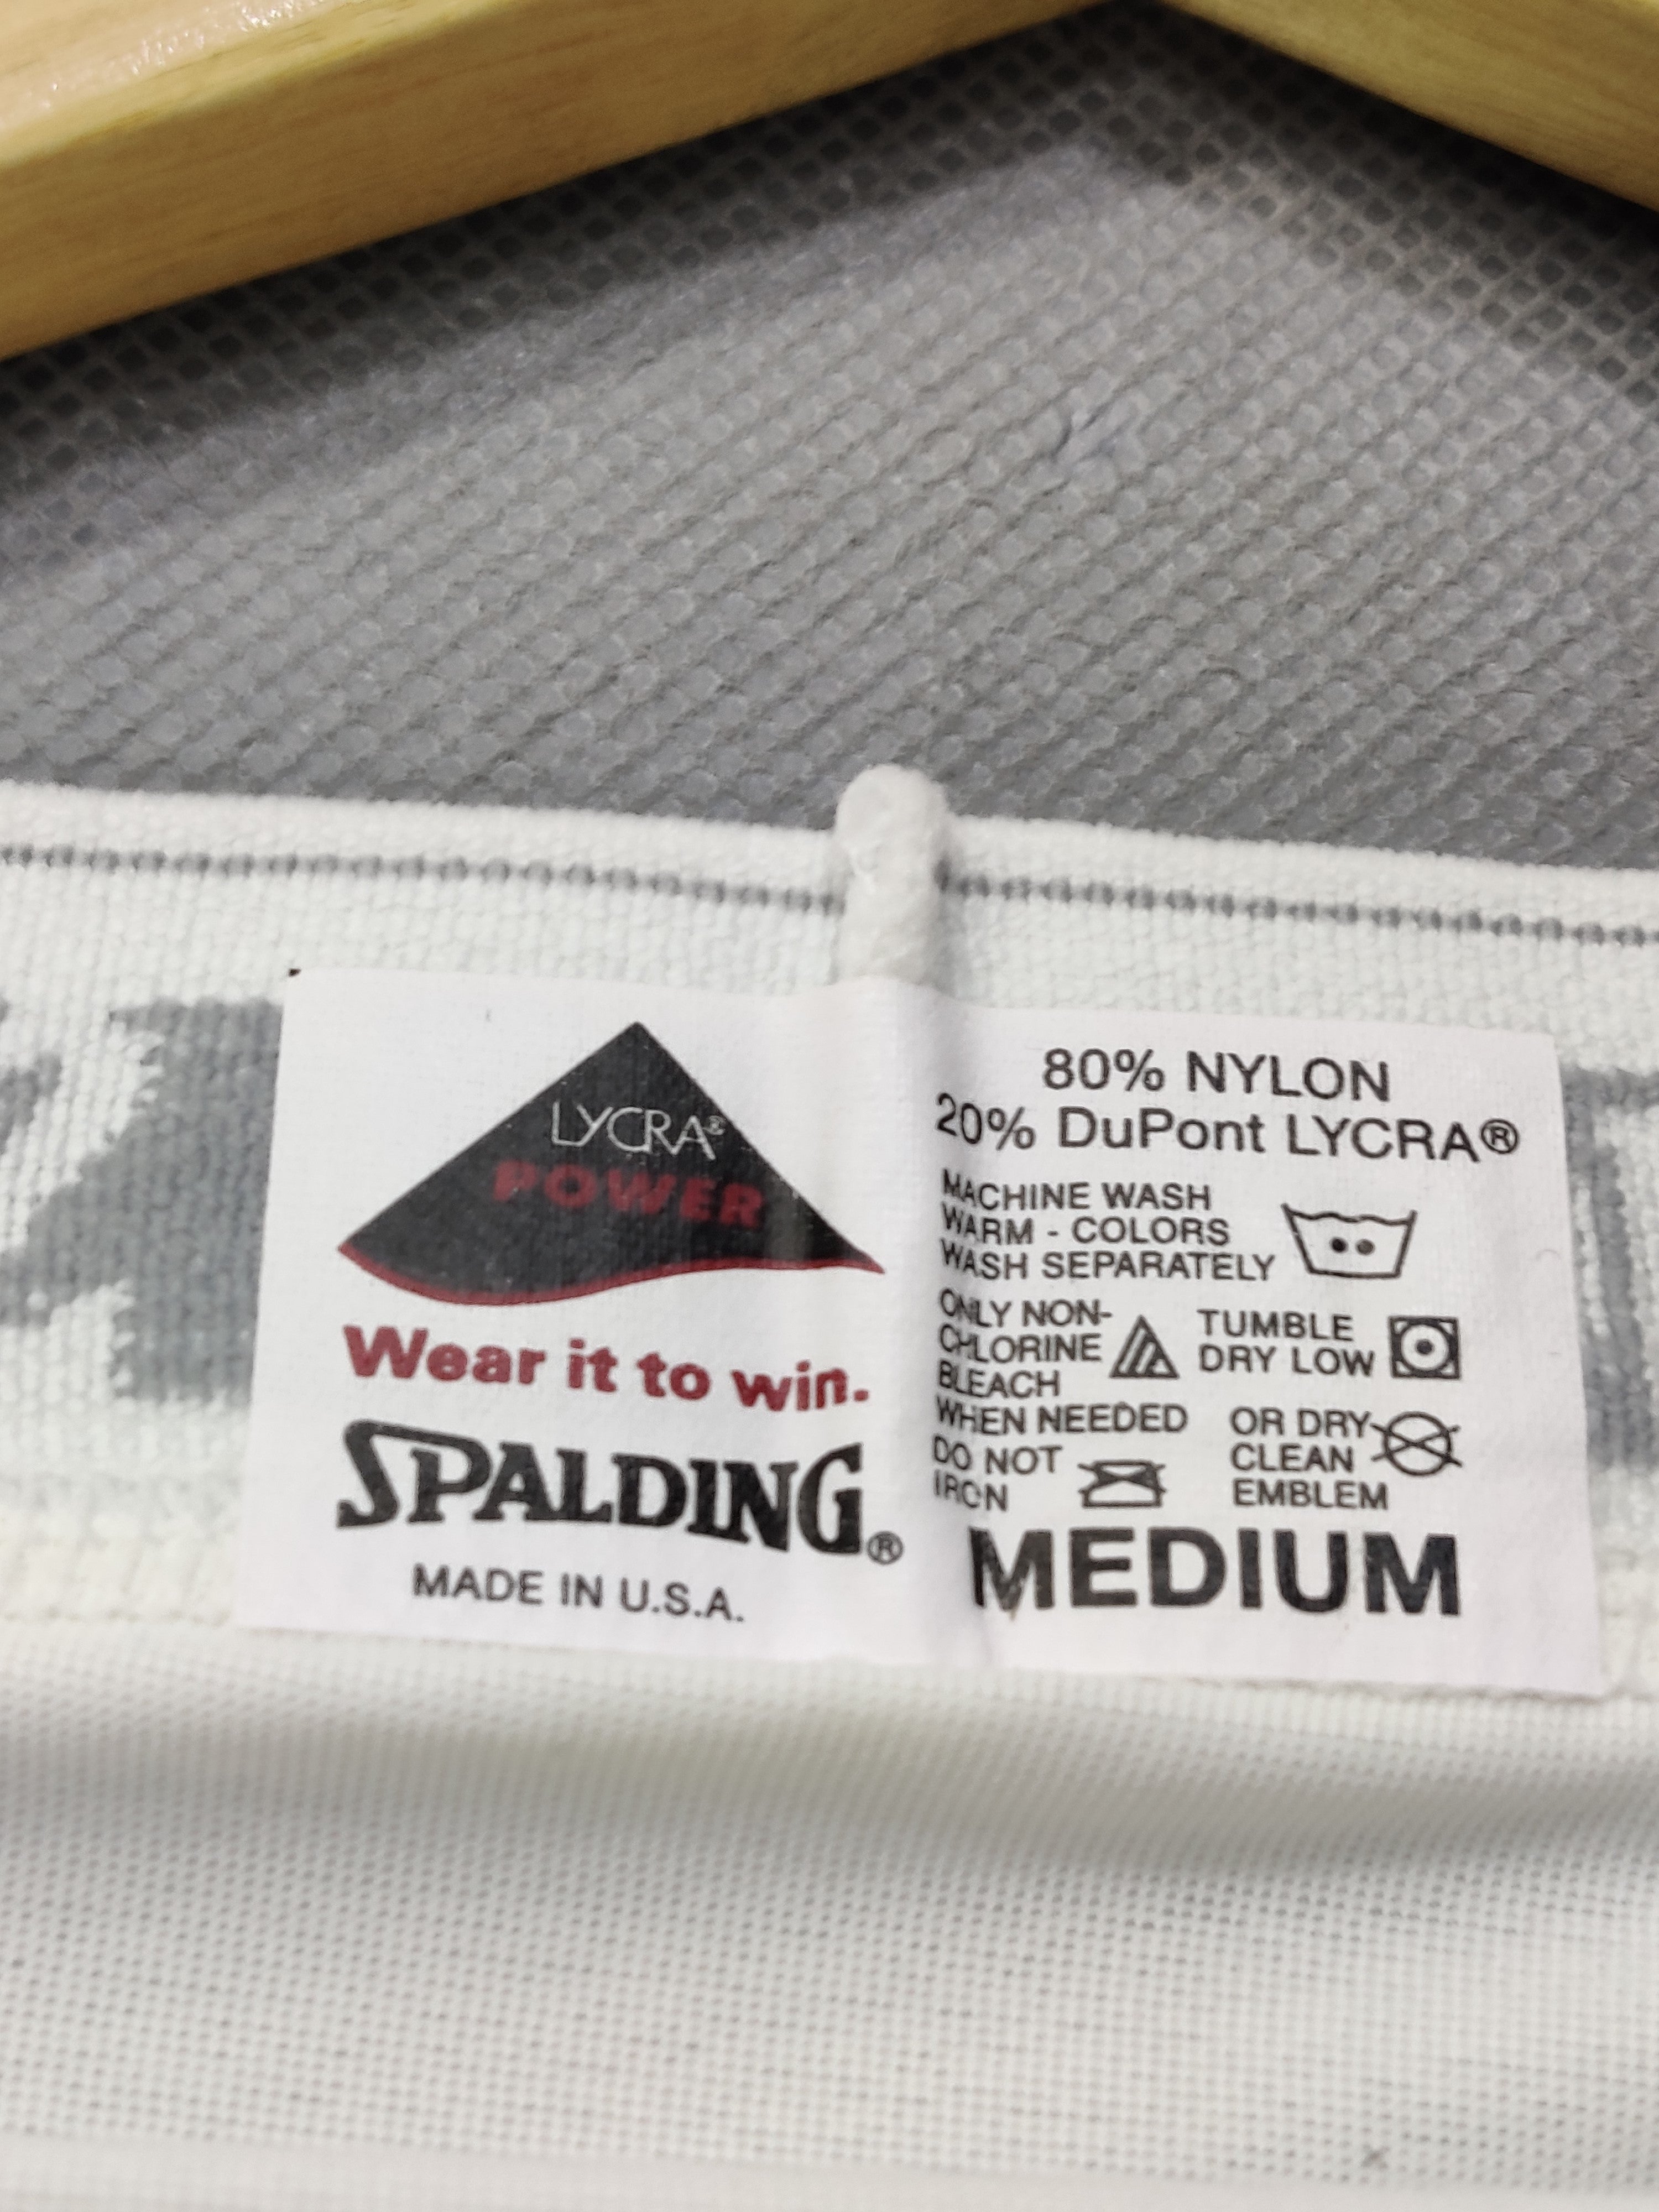 Spalding Original Branded Boxer Underwear For Men